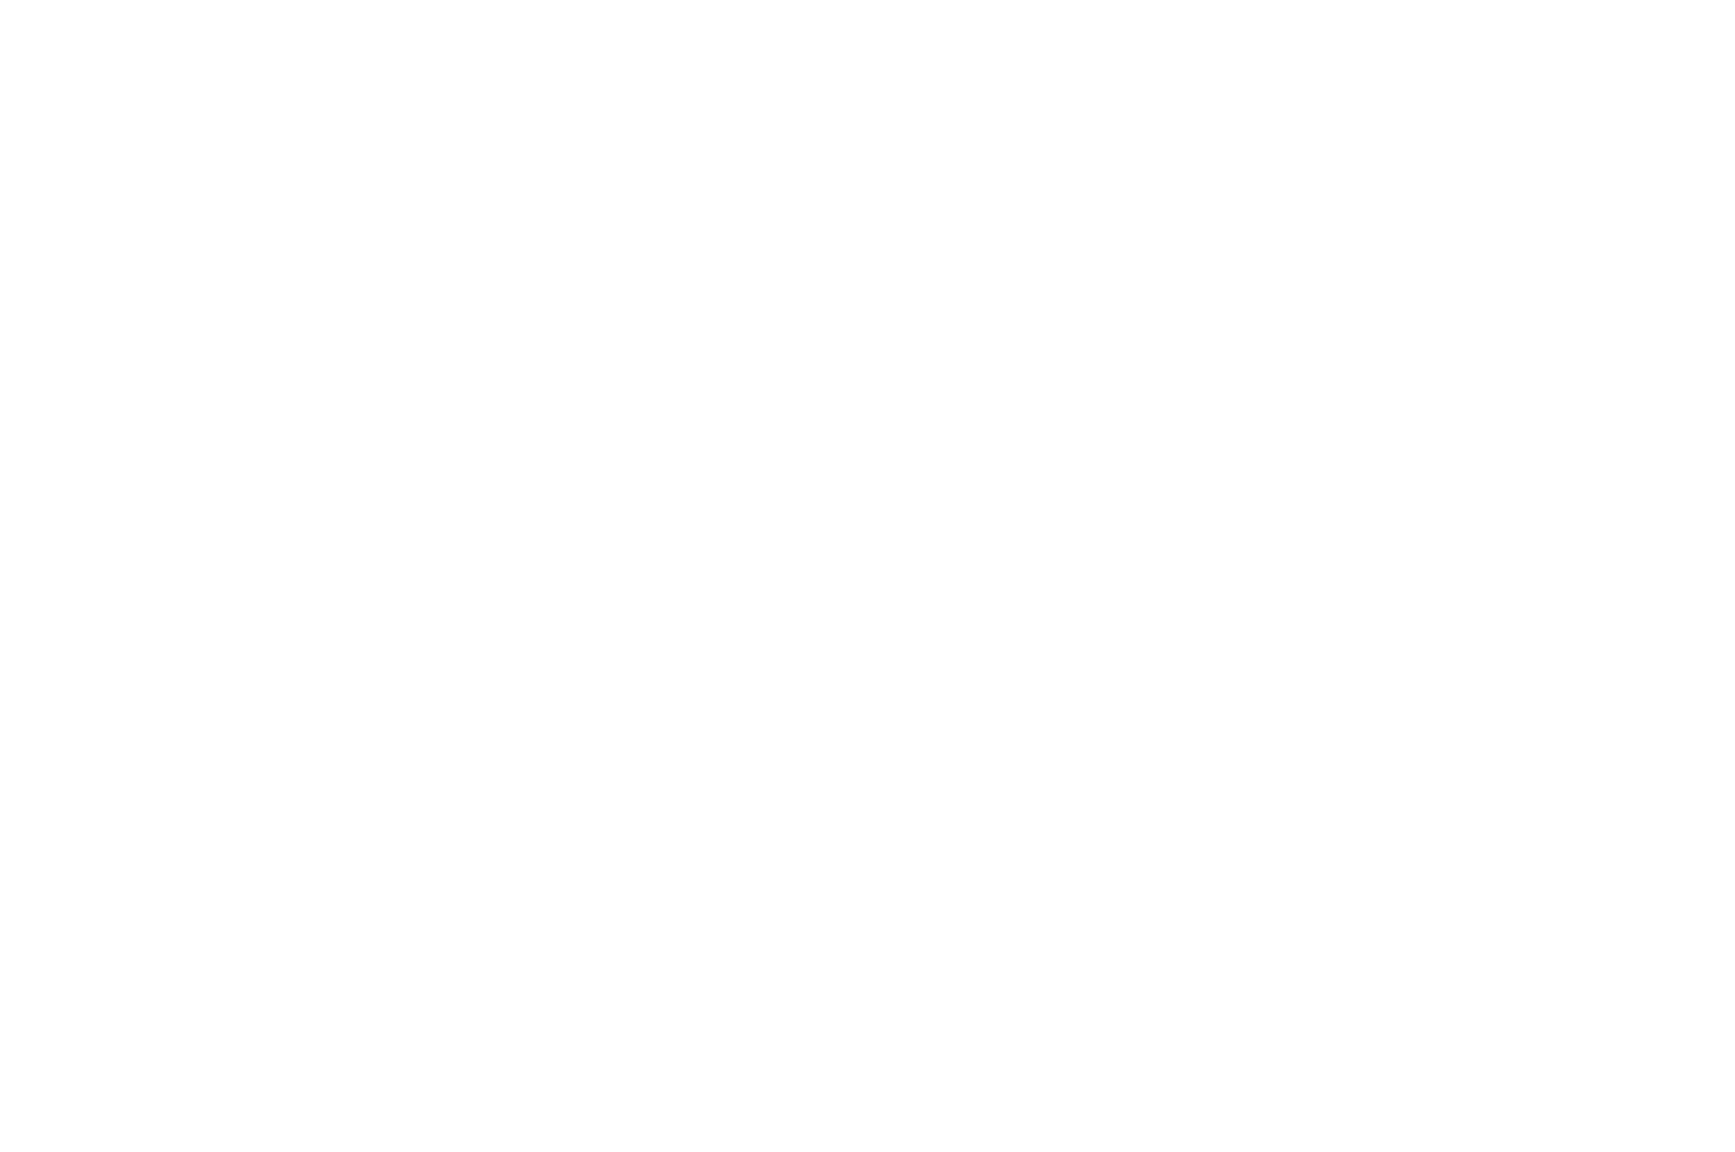 WINNER - BEST TRAVEL FILM - Canadian Cinematography Awards CaCA - 2023